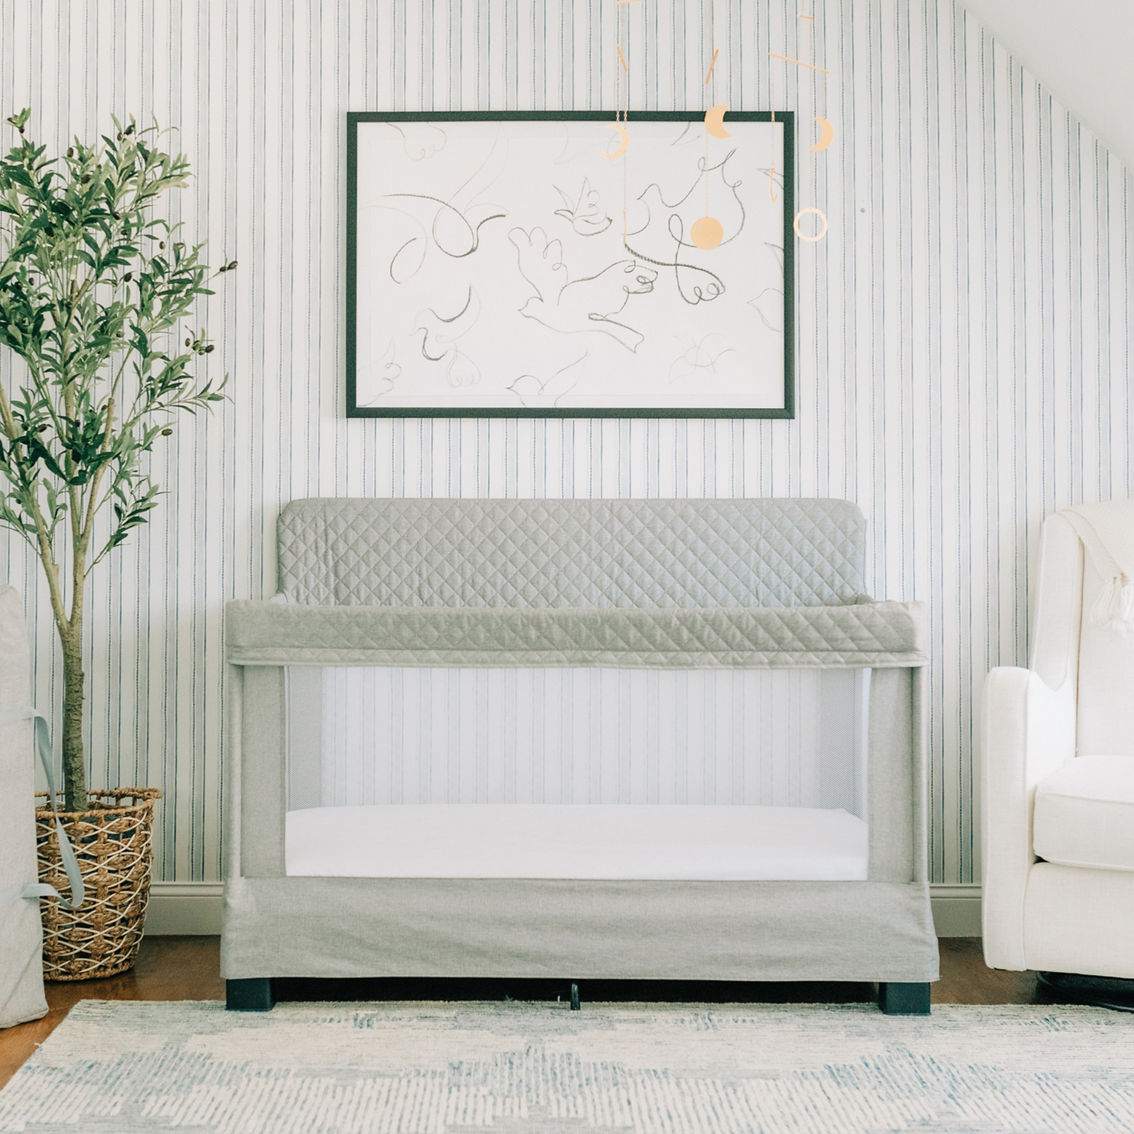 Baby Delight Horizon Breathable Mesh Crib with Headboard - Image 4 of 7